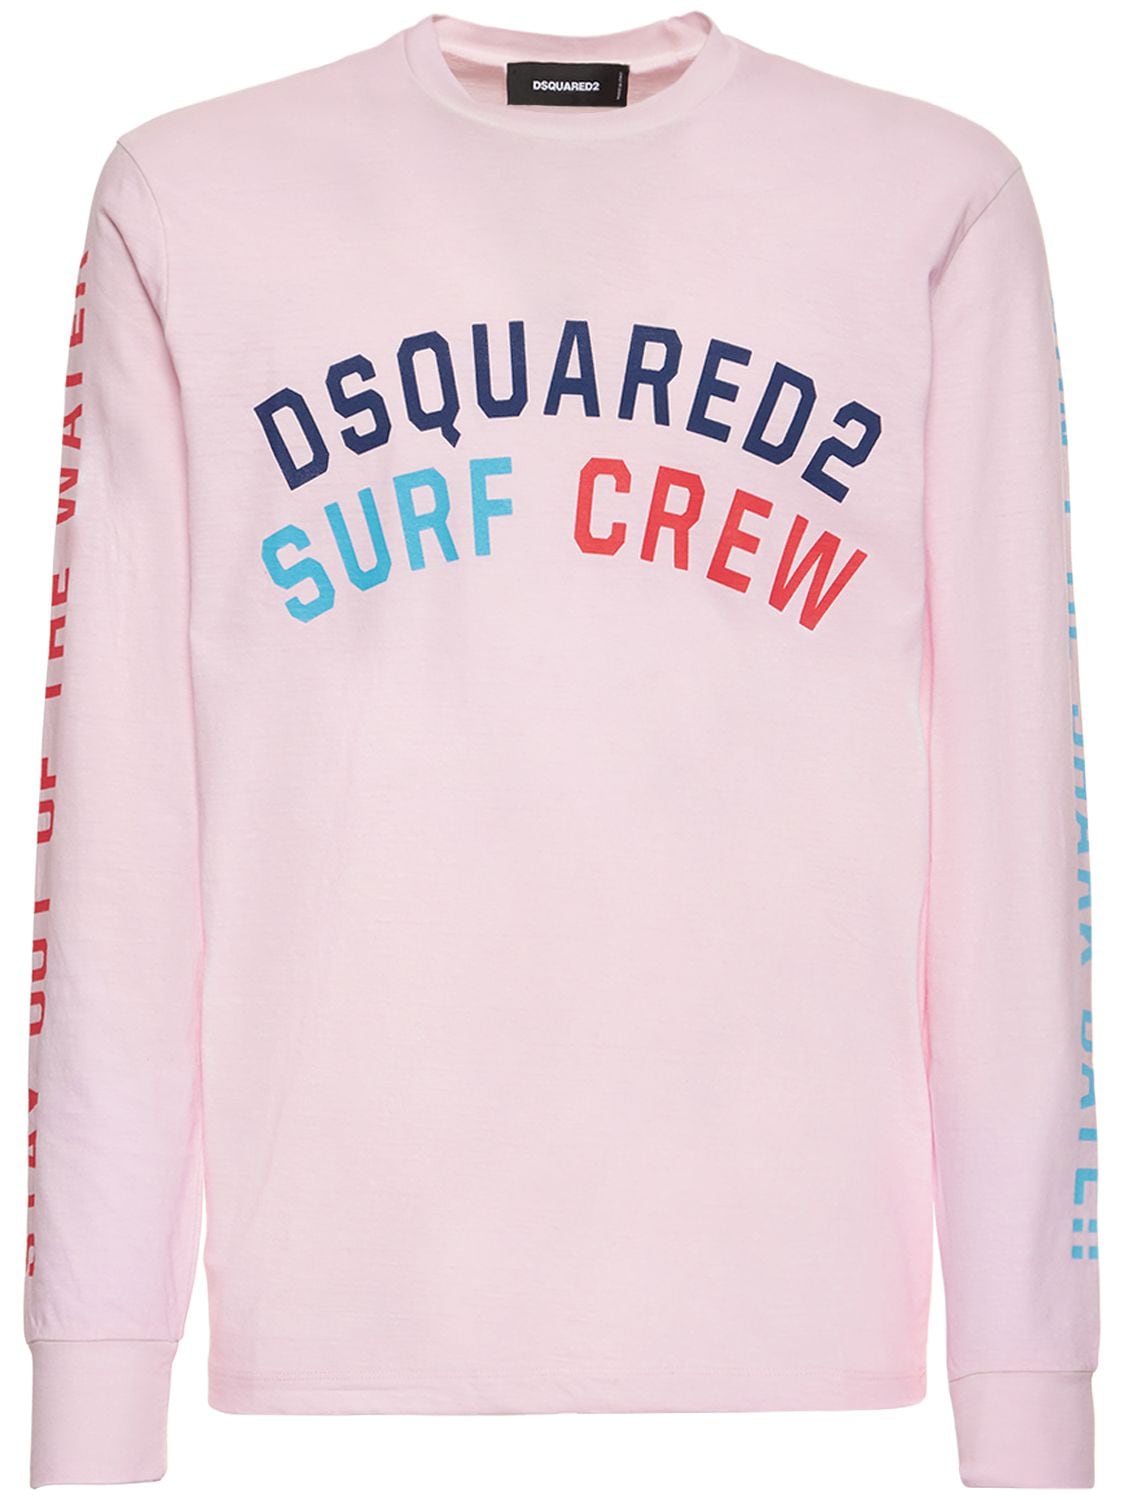 Mijnenveld Korst Leia Dsquared2 Men's Surf Crew Typographic T-shirt In Pink | ModeSens